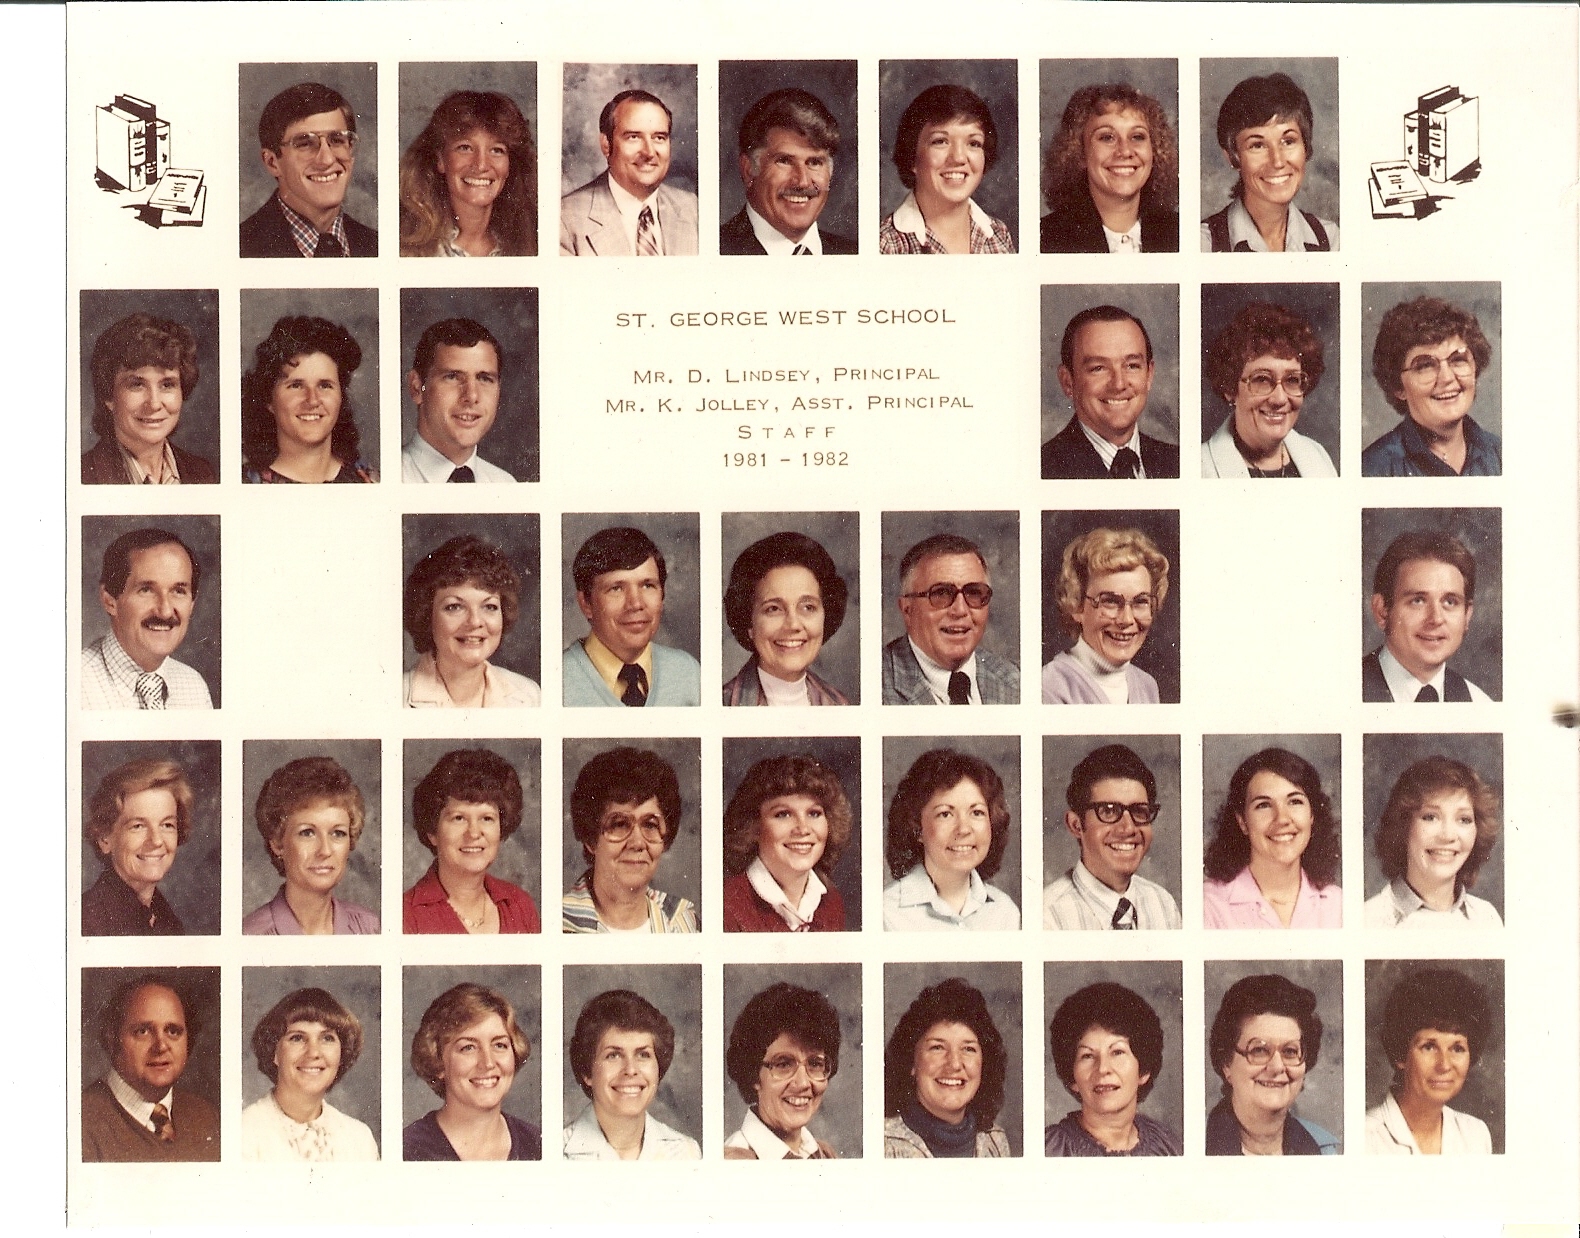 WCHS-00242 West Elementary School 1981-1982 Faculty